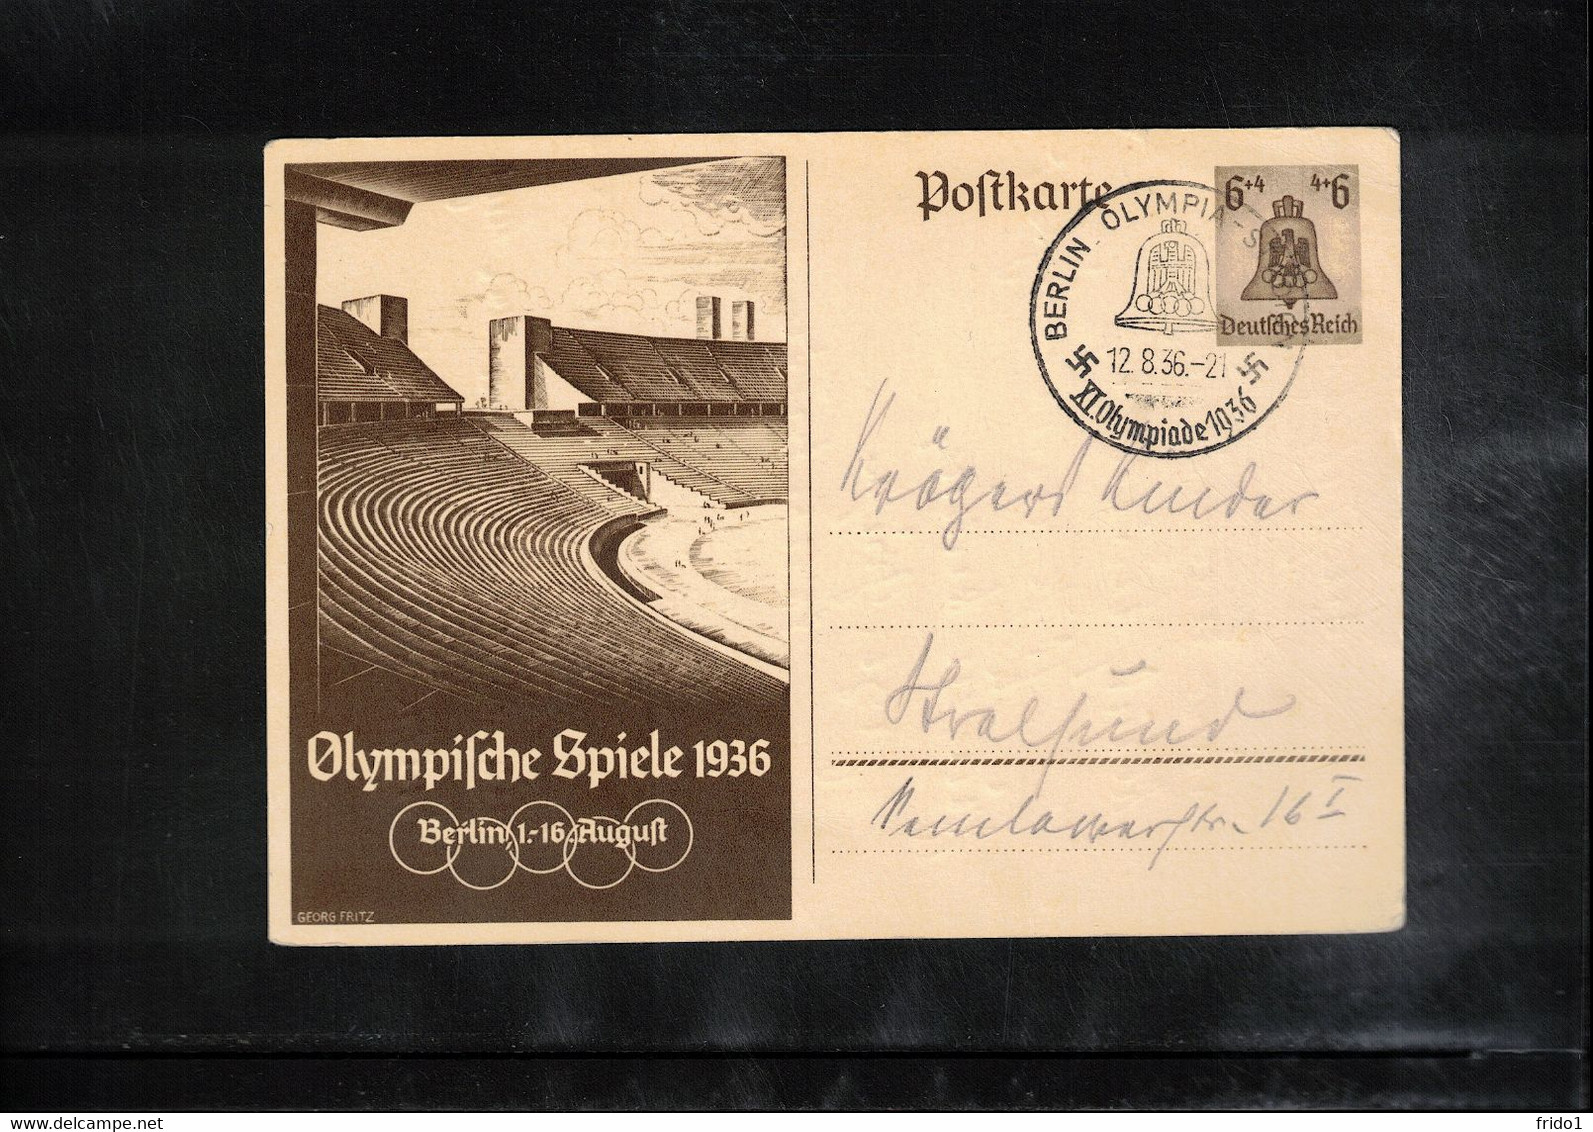 Germany / Deutschland 1936 Olympic Games Berlin Interesting Postcard Olympic Stadion Postmark - Sommer 1936: Berlin